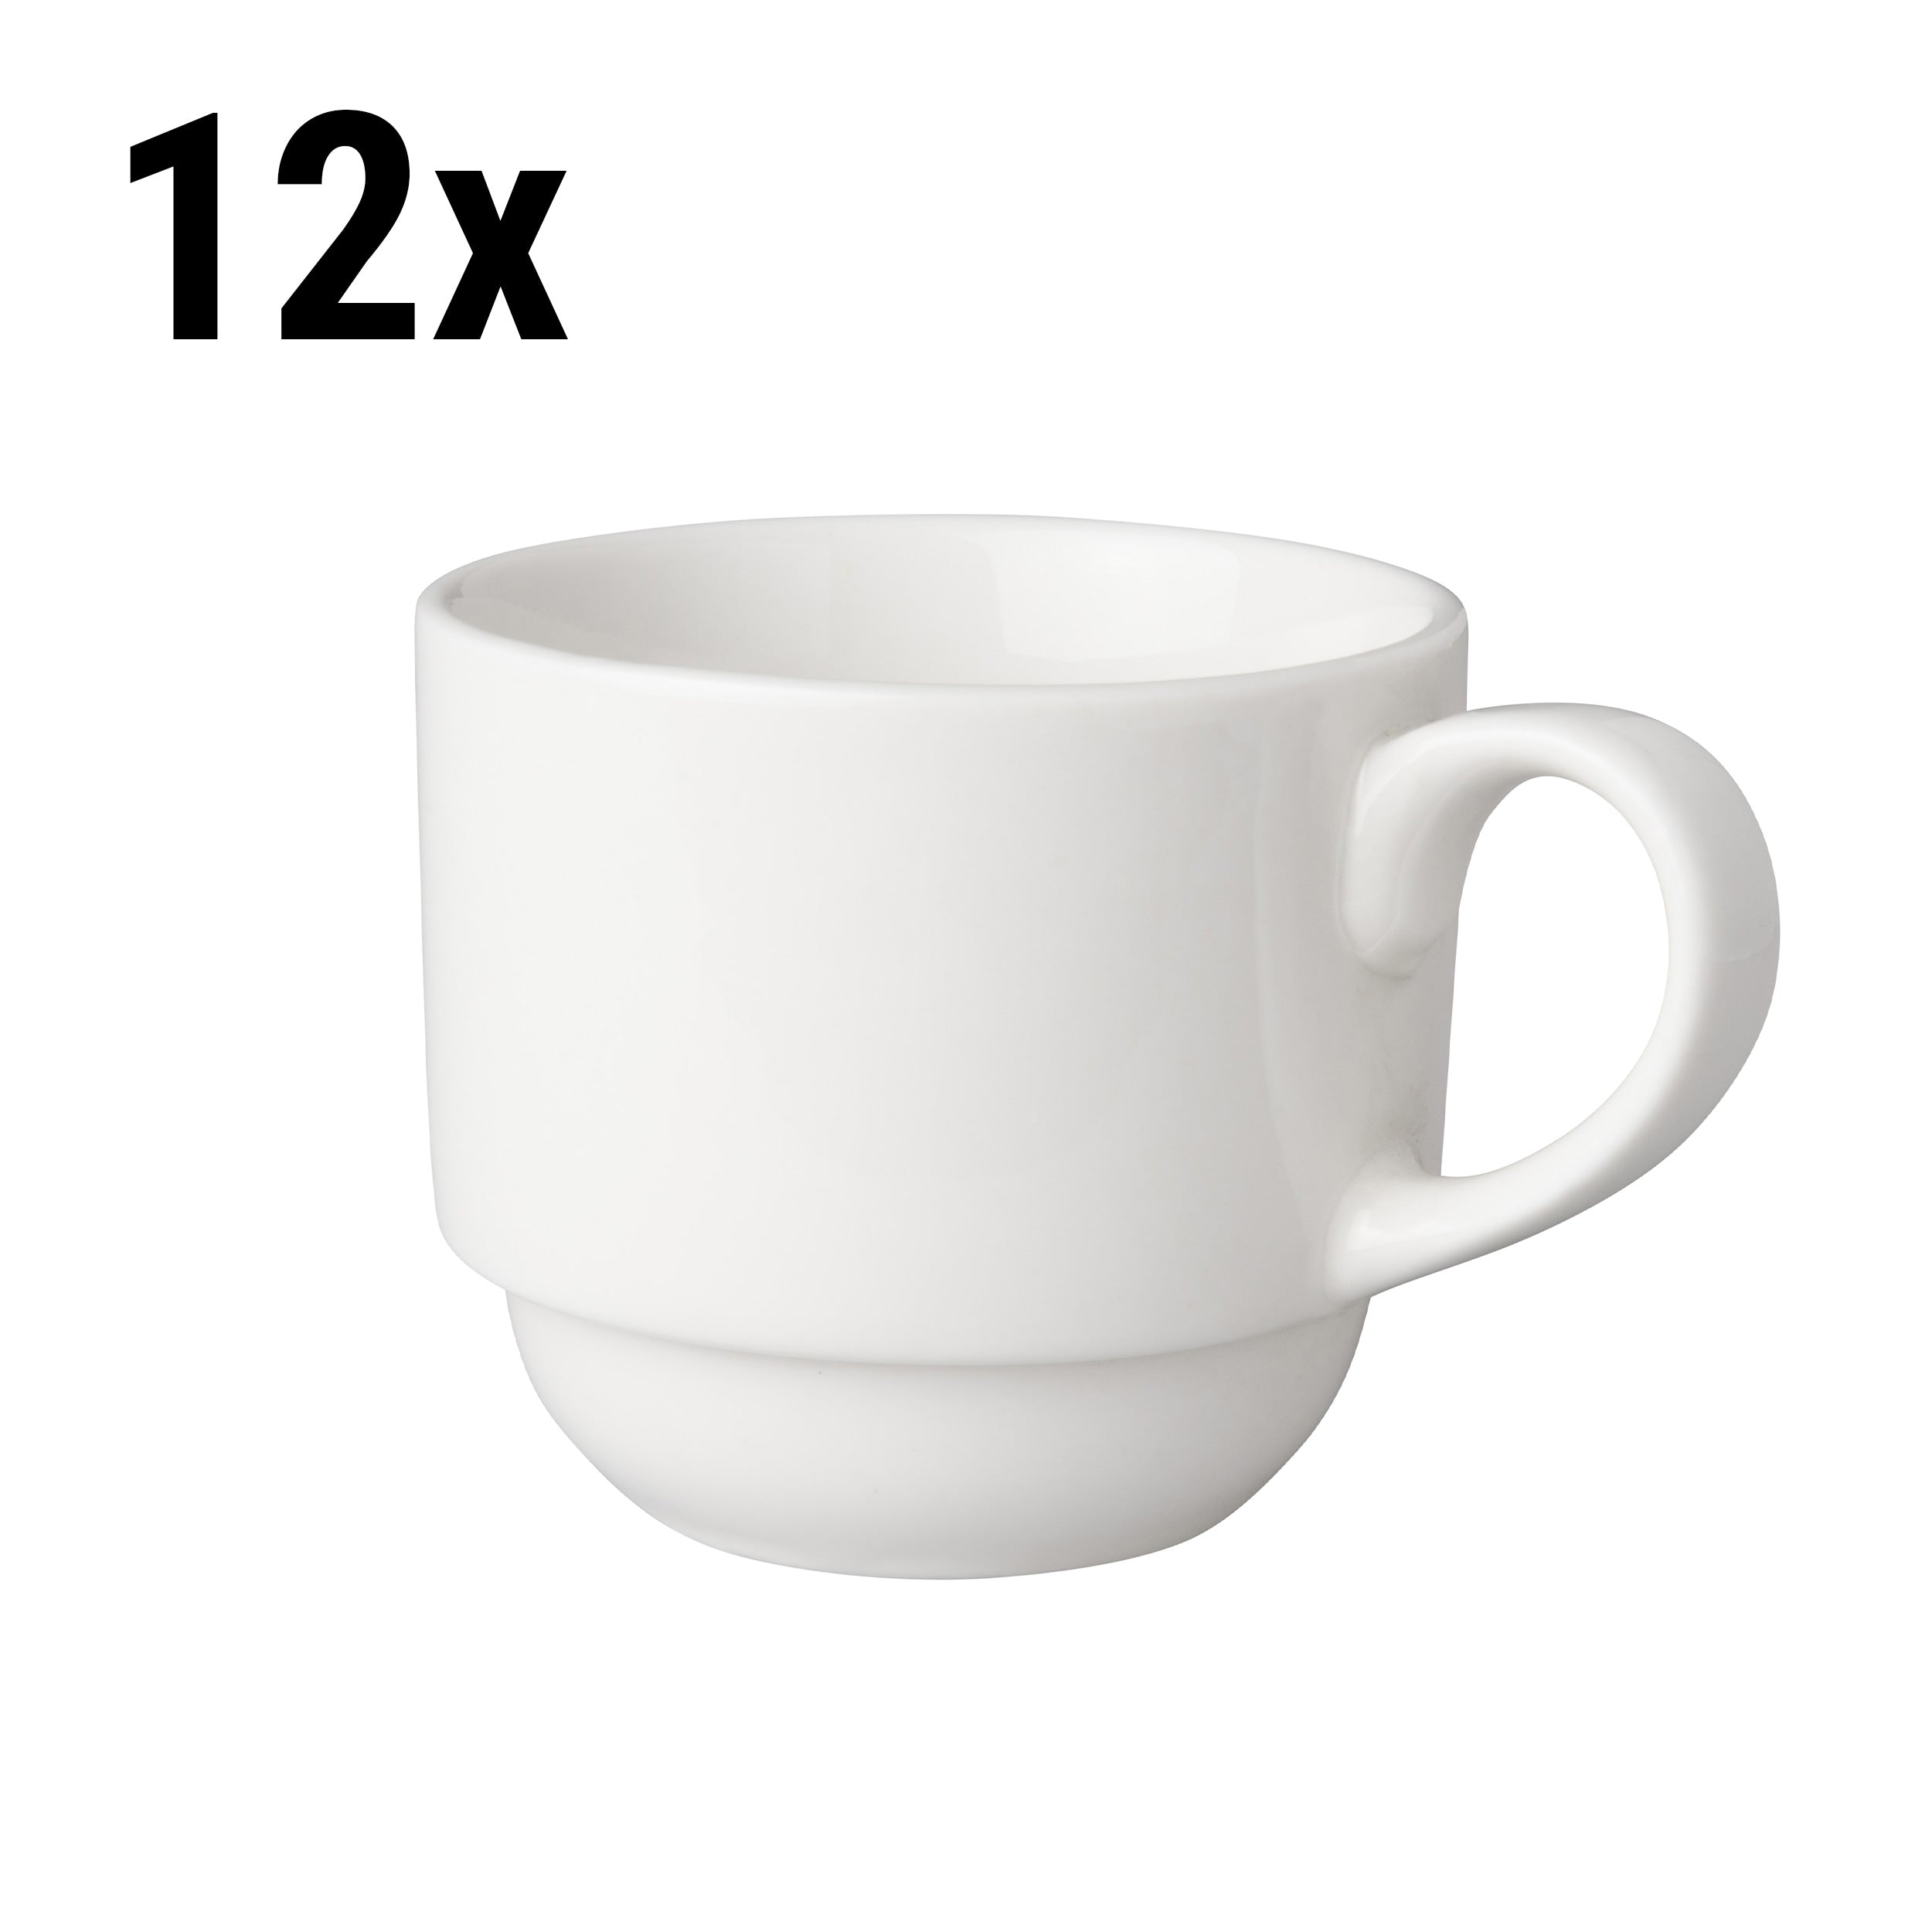 (12 stk.) Mammoet kaffekopp - 20 cl - Hvit